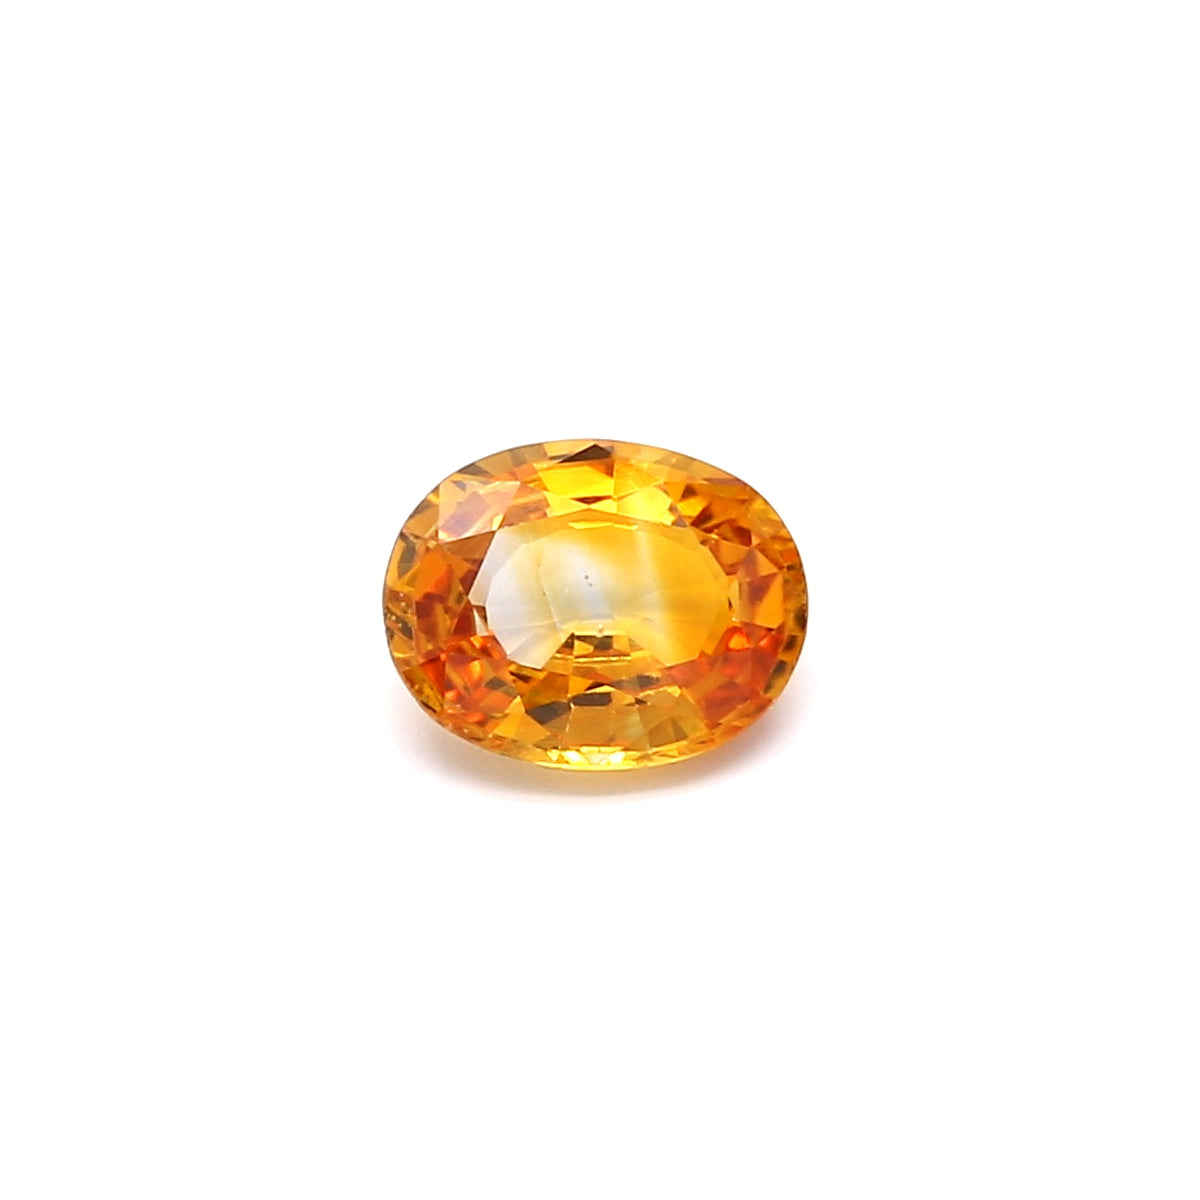 1.17ct Orangy Yellow, Oval Sapphire, Heated, Sri Lanka - 7.52 x 5.94 x 3.06mm